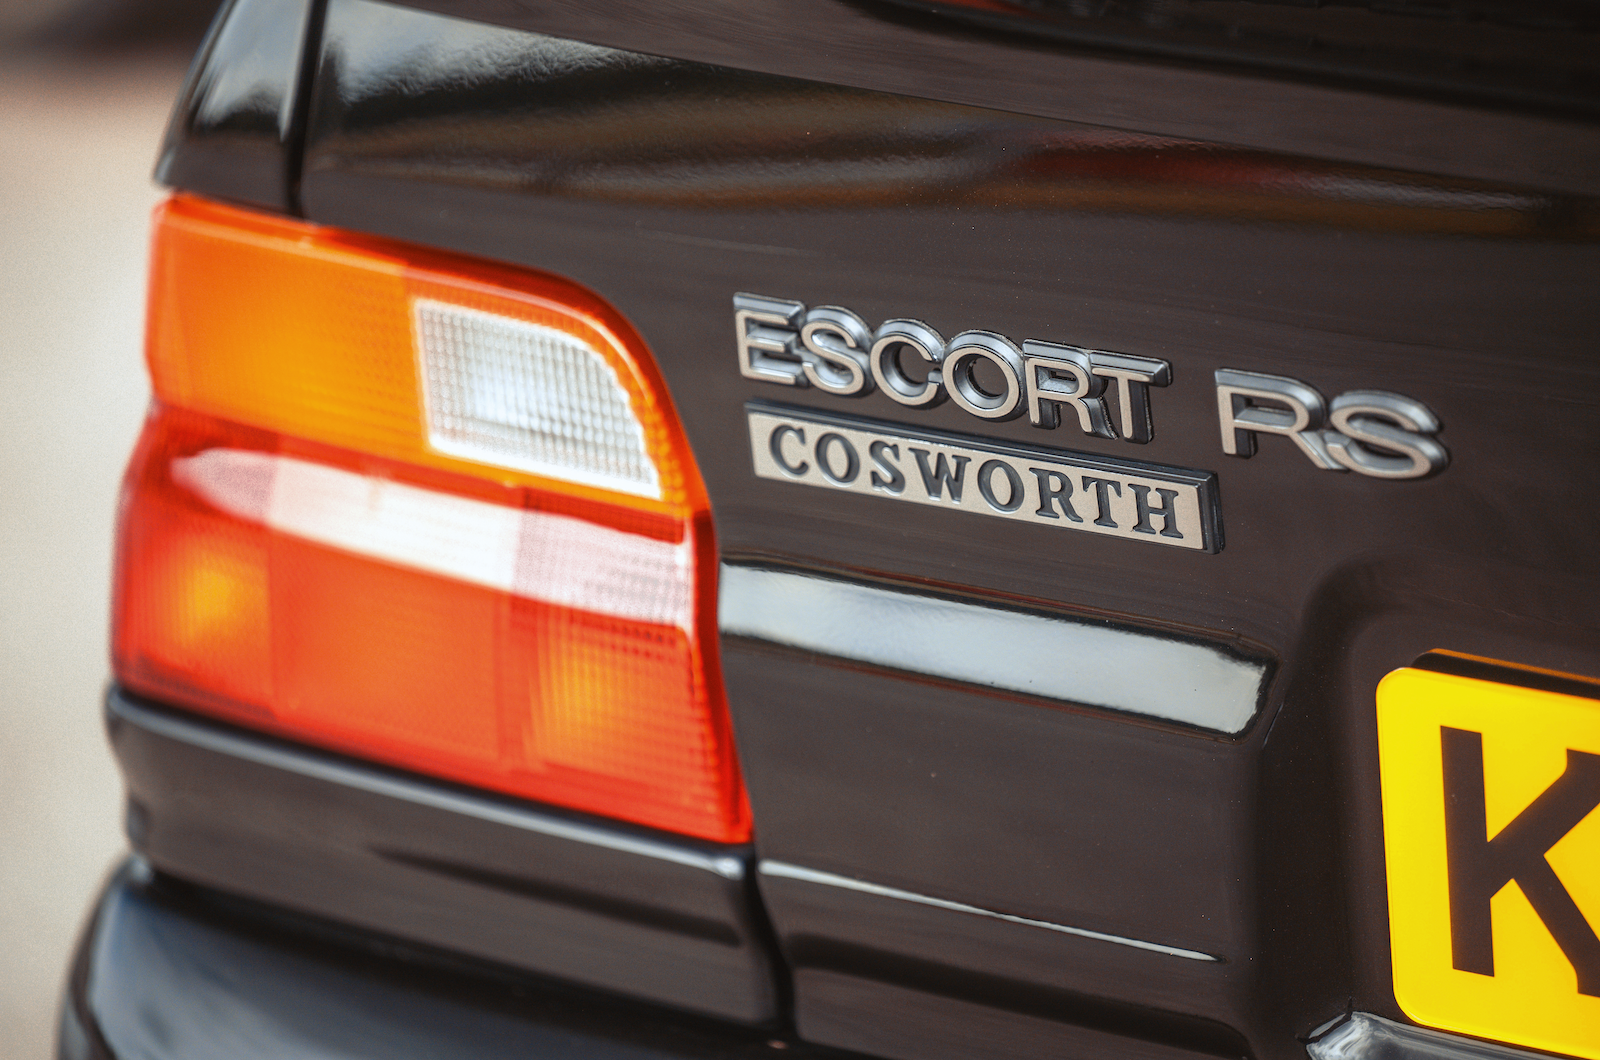 Modern Metal Framed Ford Escort RS Turbo Illuminated Sign